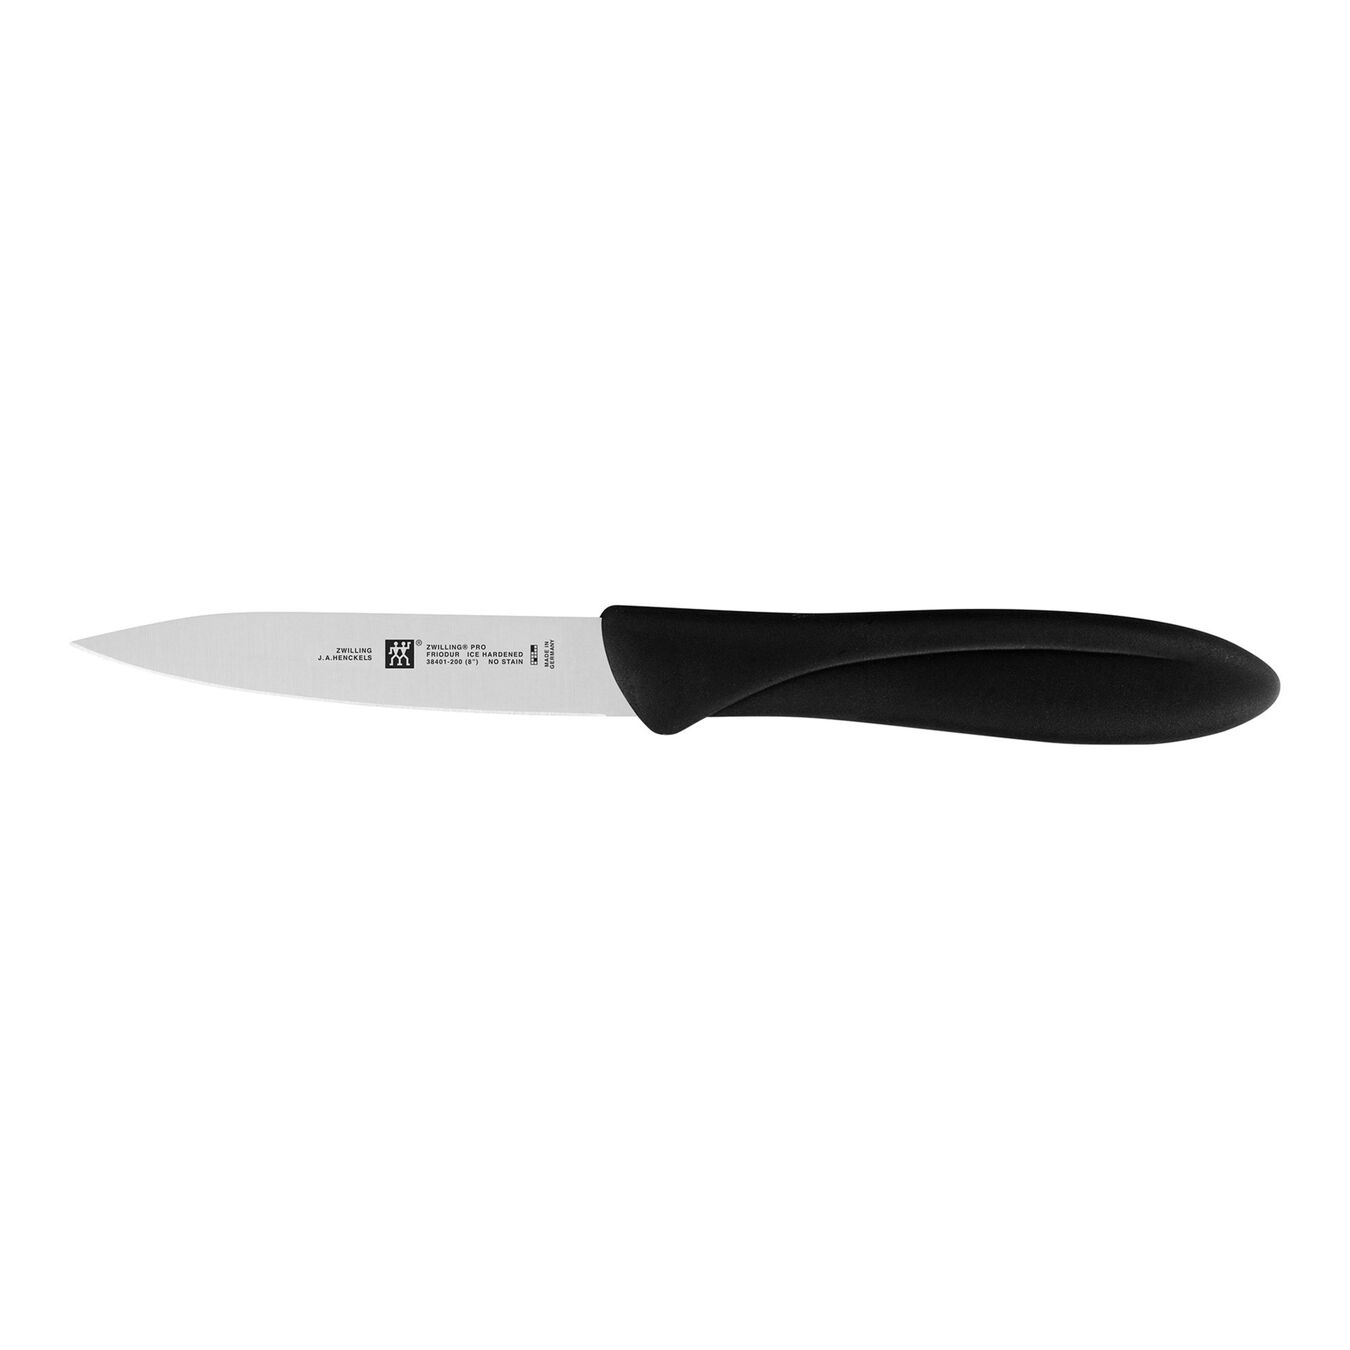 4-inch, Paring Knife - Black Handle,,large 1